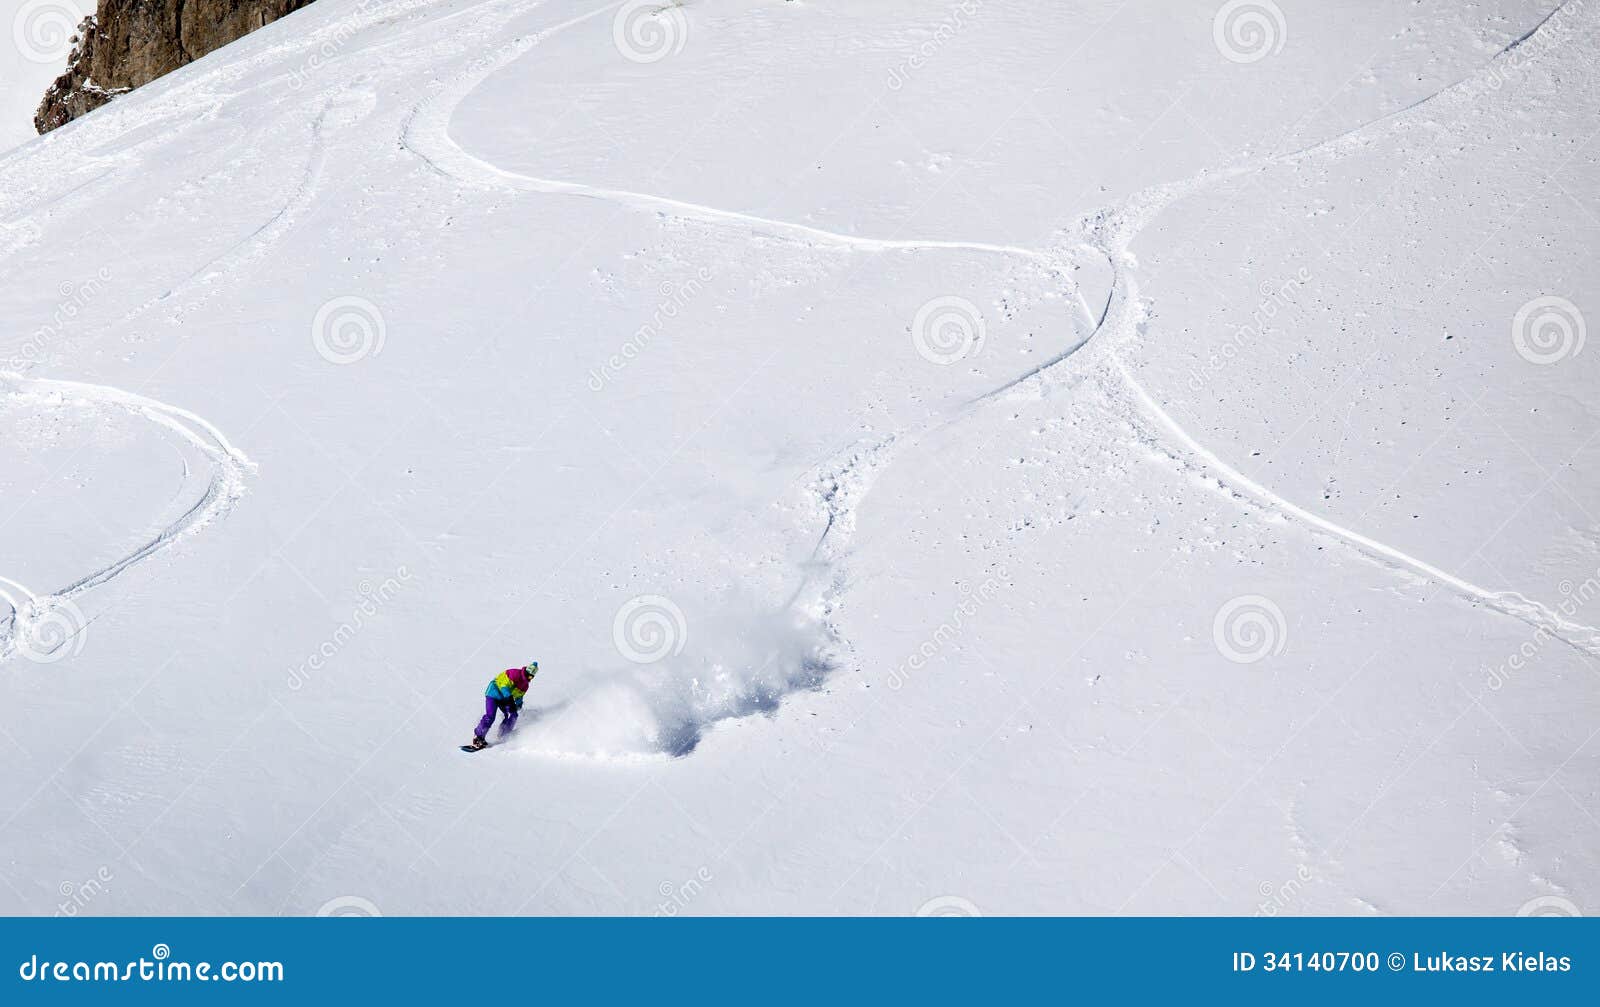 backcountry snowboarder riding fresh powder